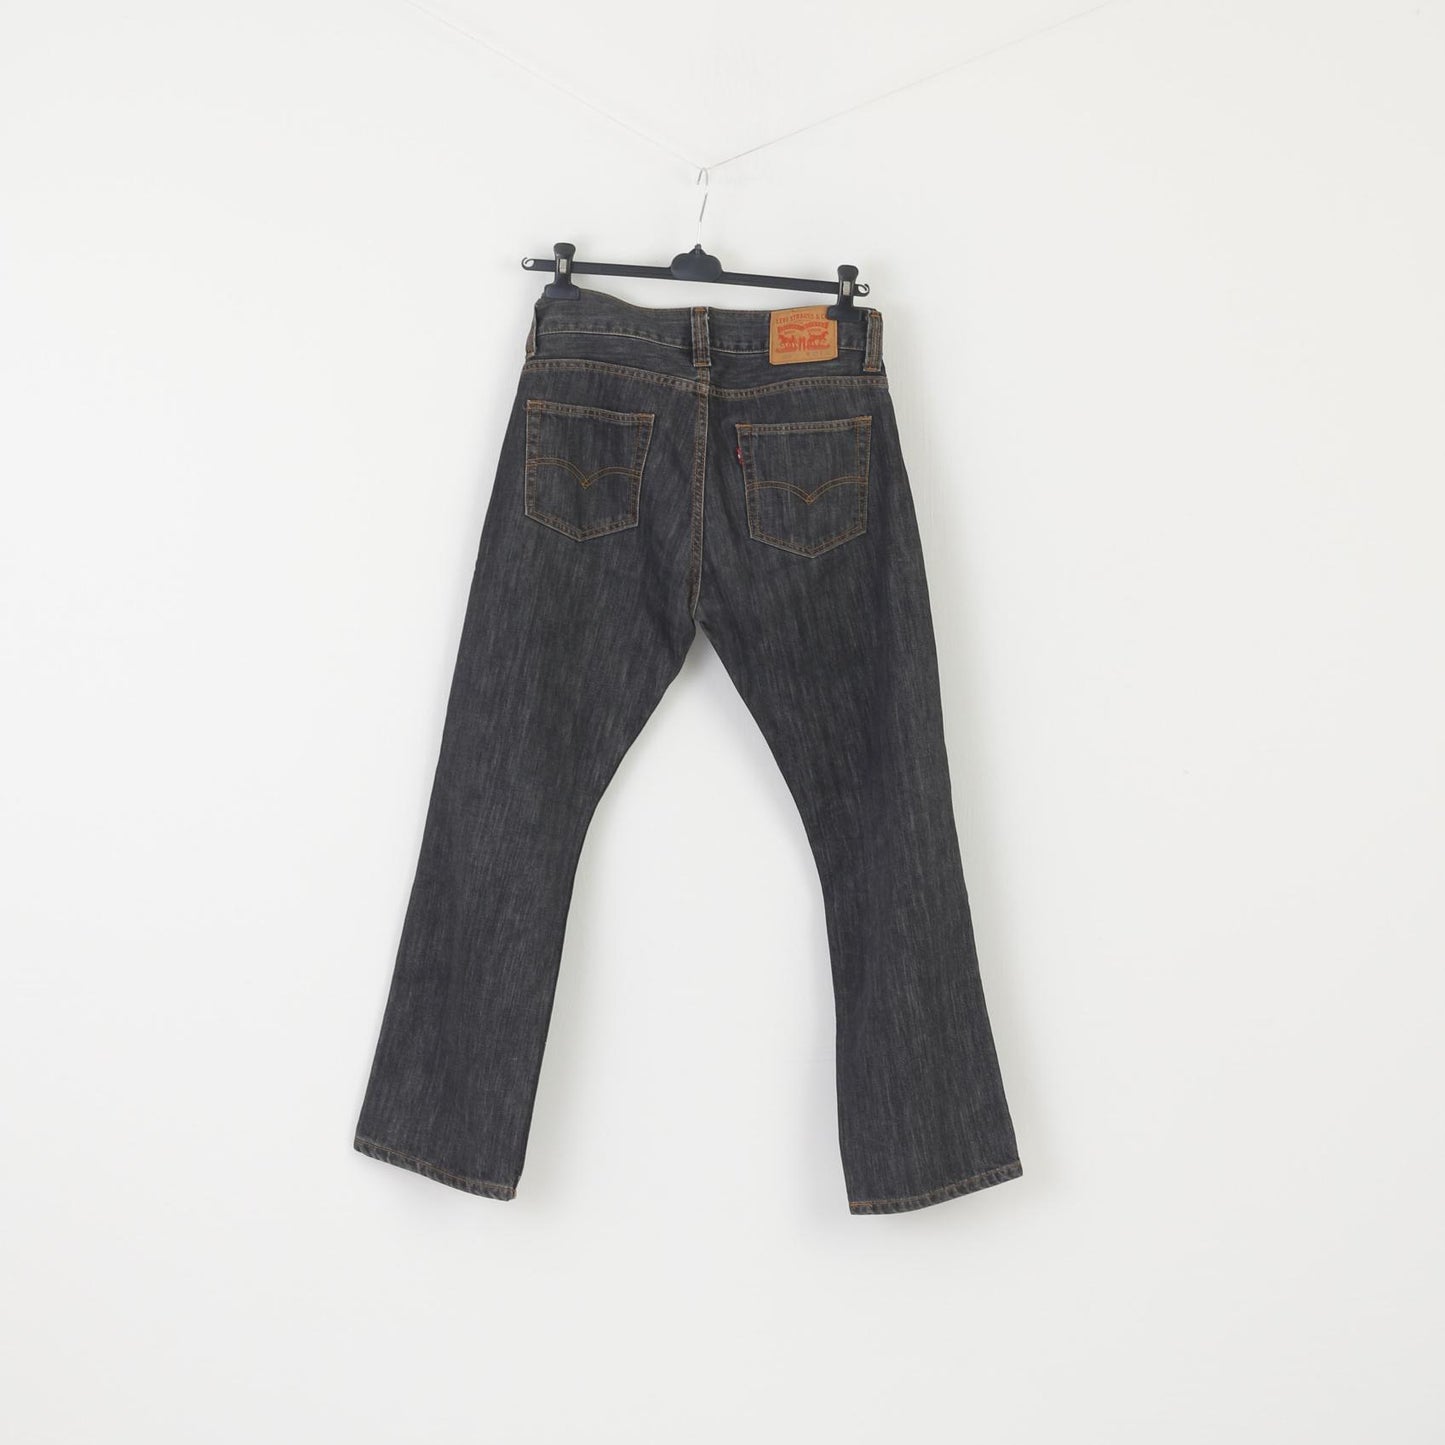 Levi's 506 Mwn 32 Jeans Pantalon Marine Gris Vintage Riveté Vintage Denim Pantalon